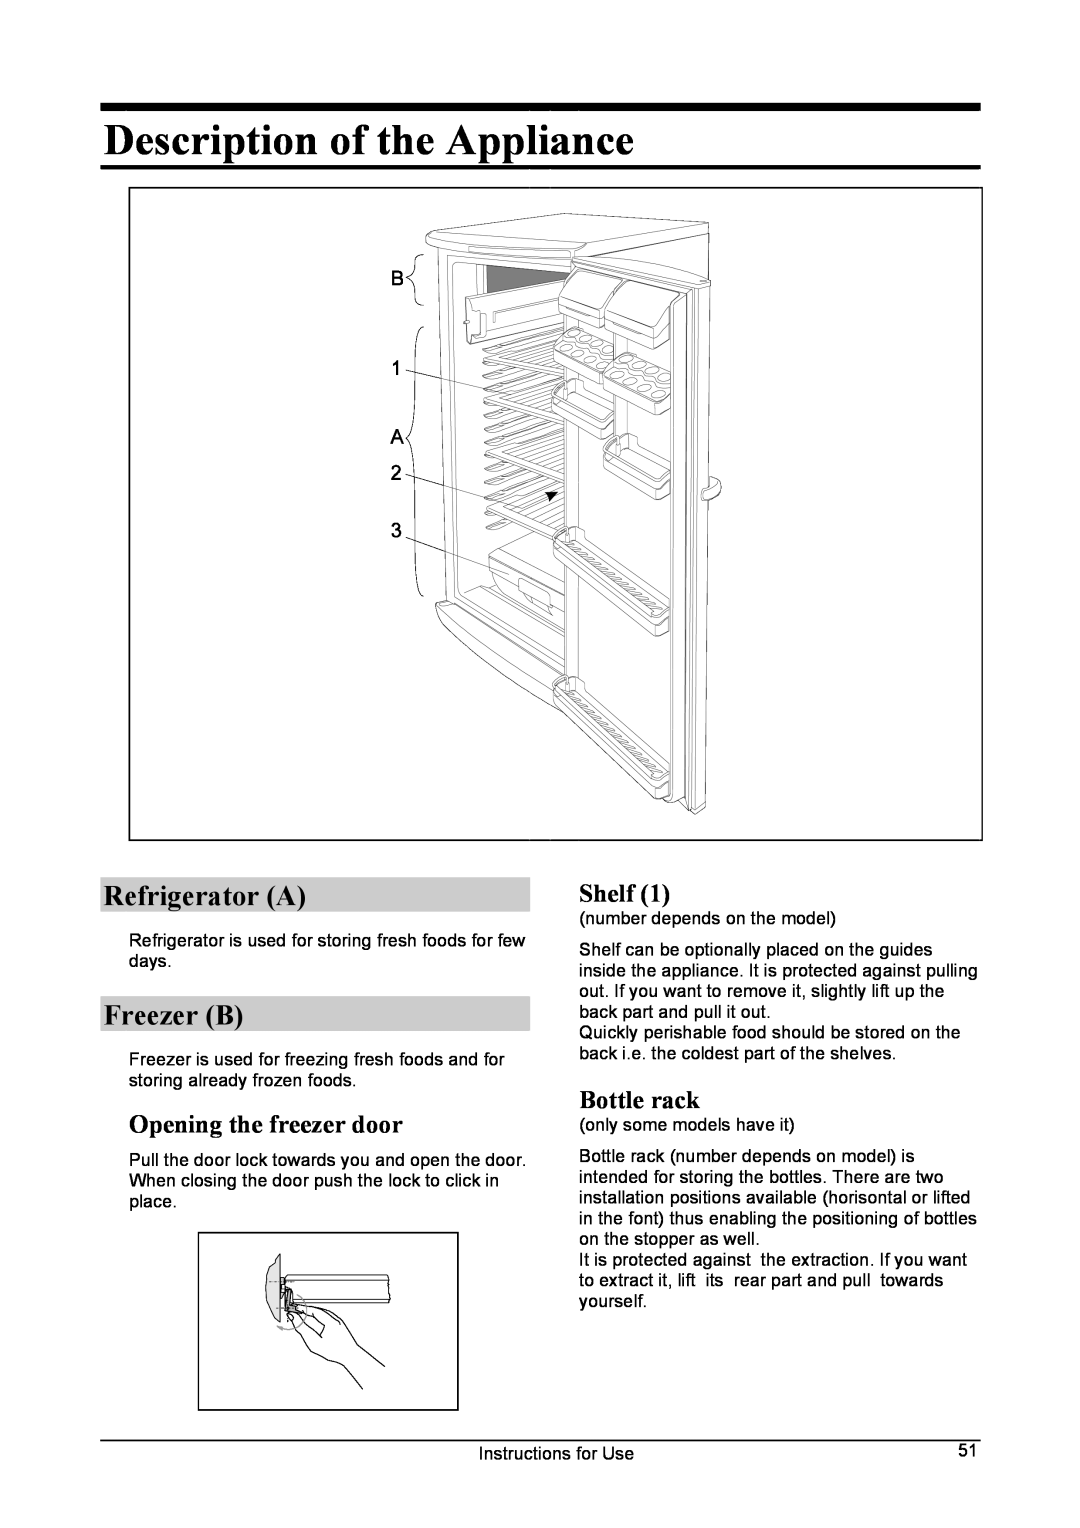 Smeg FA28B manual Description of the Appliance, Refrigerator A, Freezer B, Opening the freezer door, Bottle rack, Shelf 